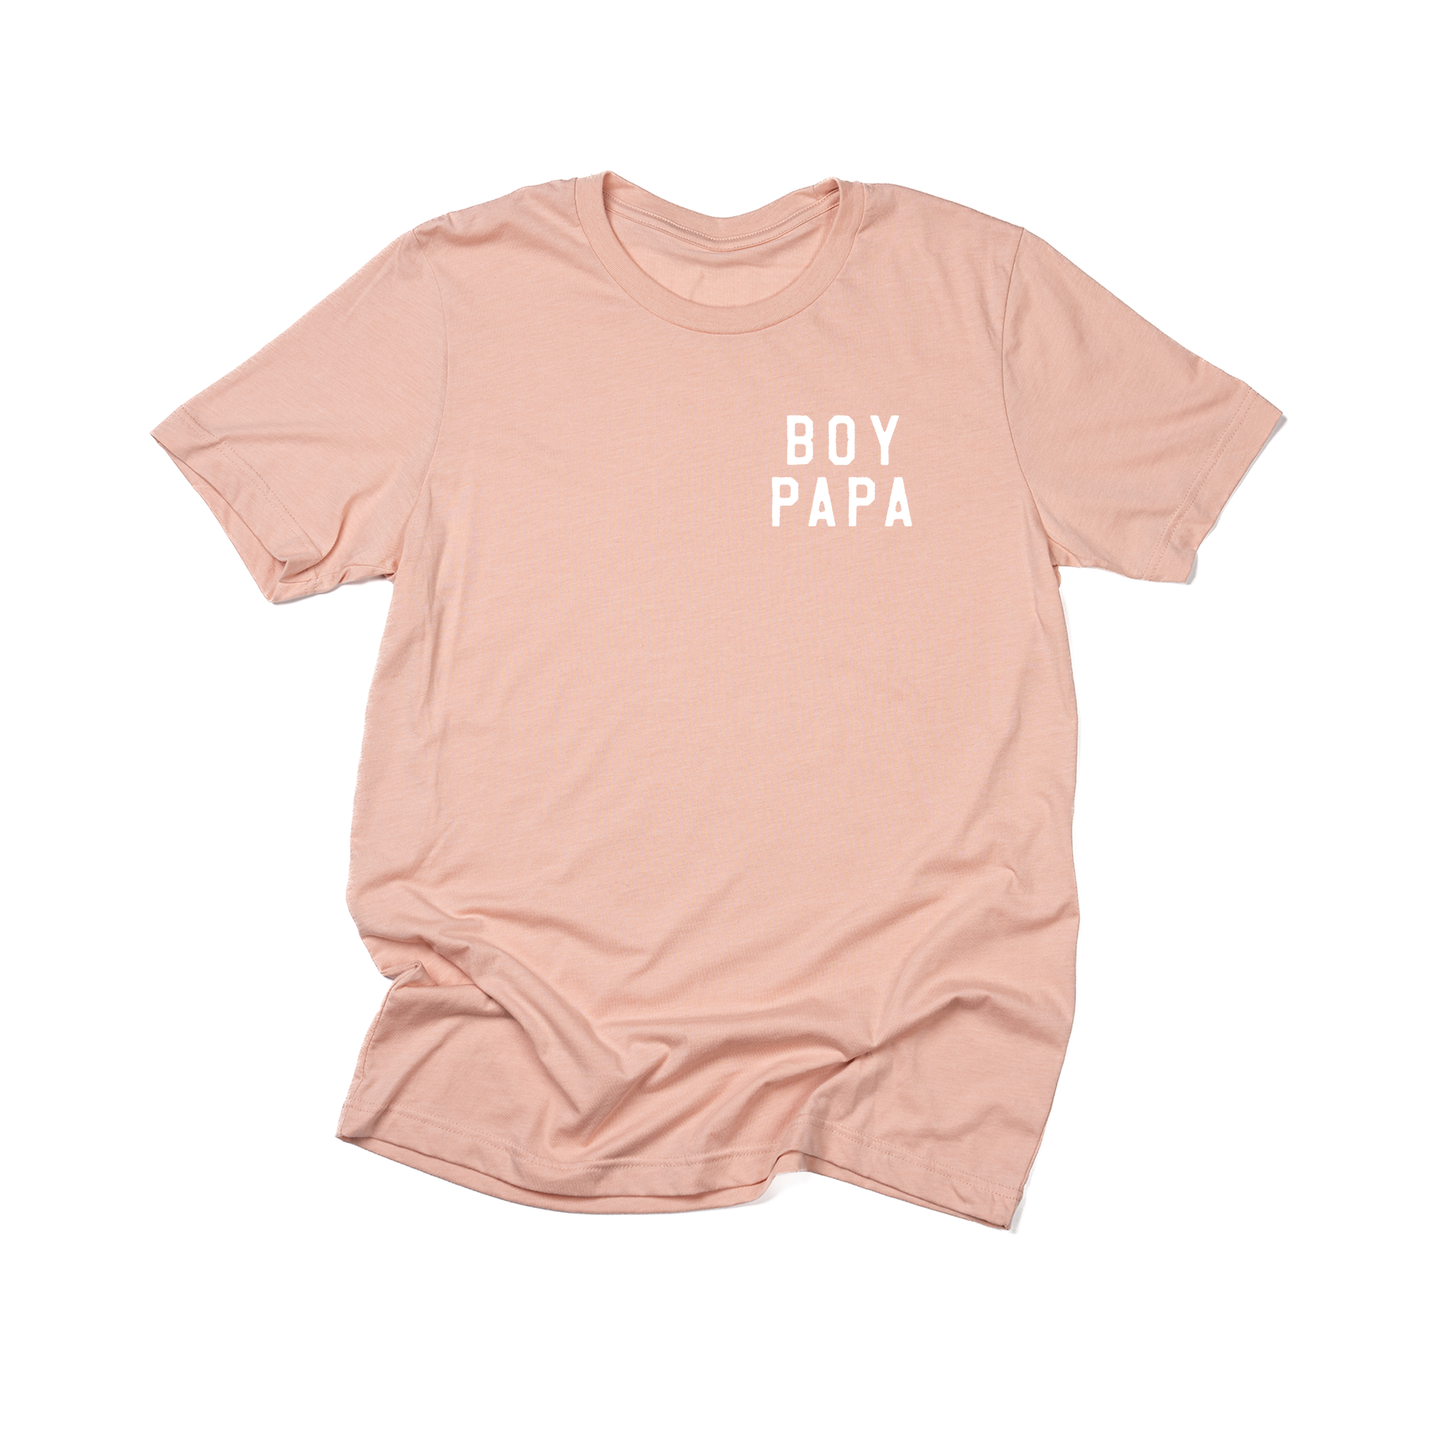 Boy Papa (Pocket, White) - Tee (Peach)